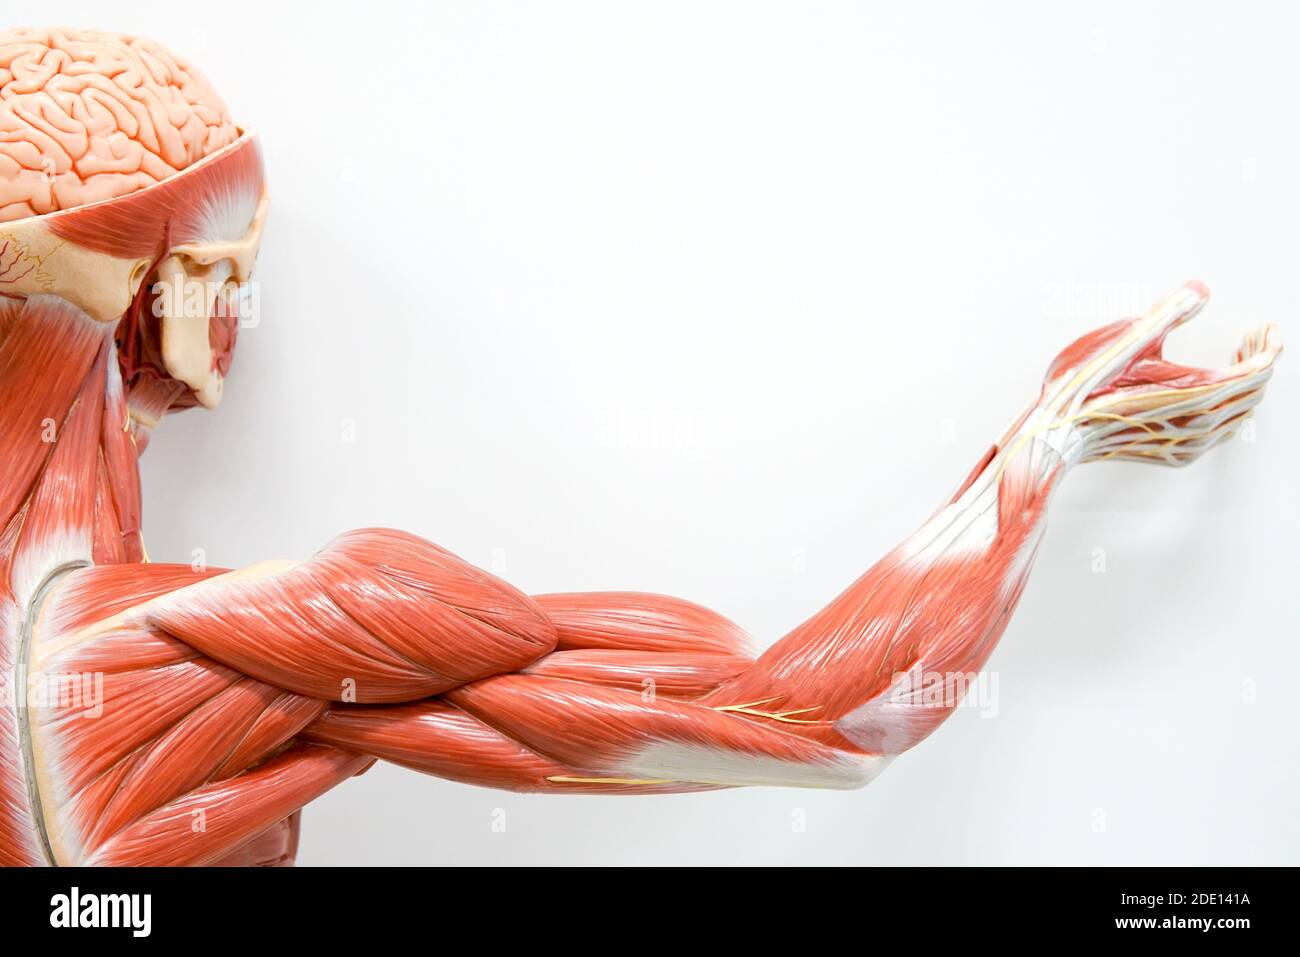 Human anatomy model Stock Photo